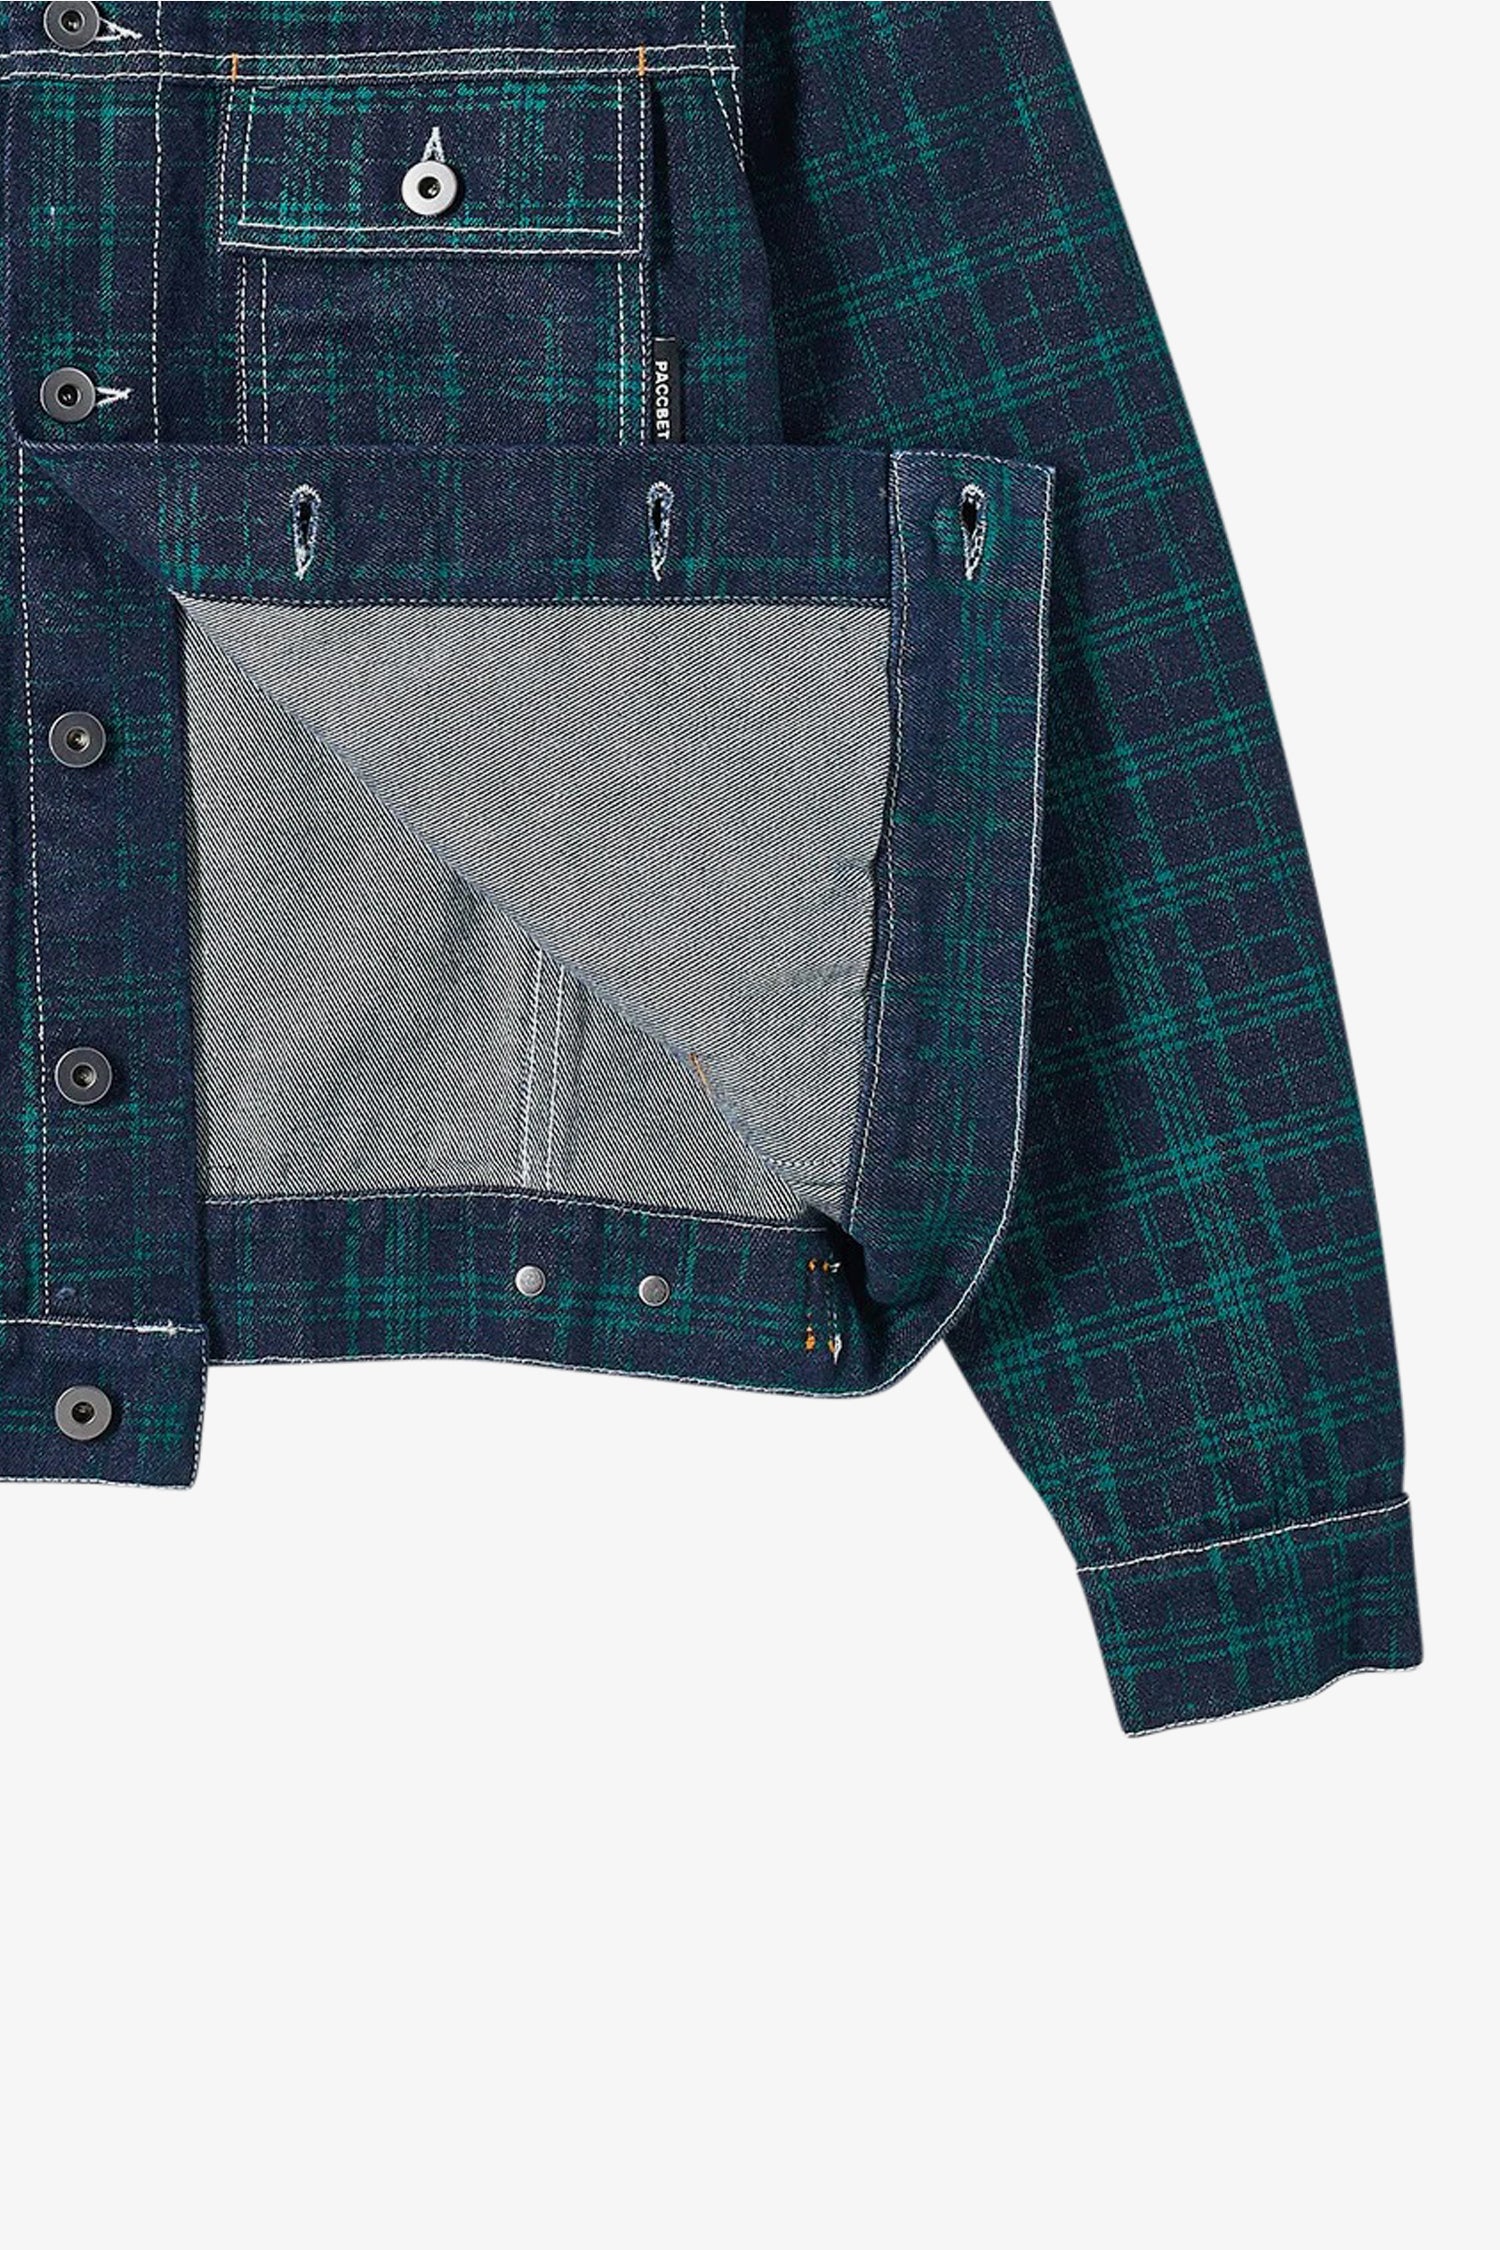 Selectshop FRAME - RASSVET Contrast Stitch Cowboy Jacket Outerwear Dubai